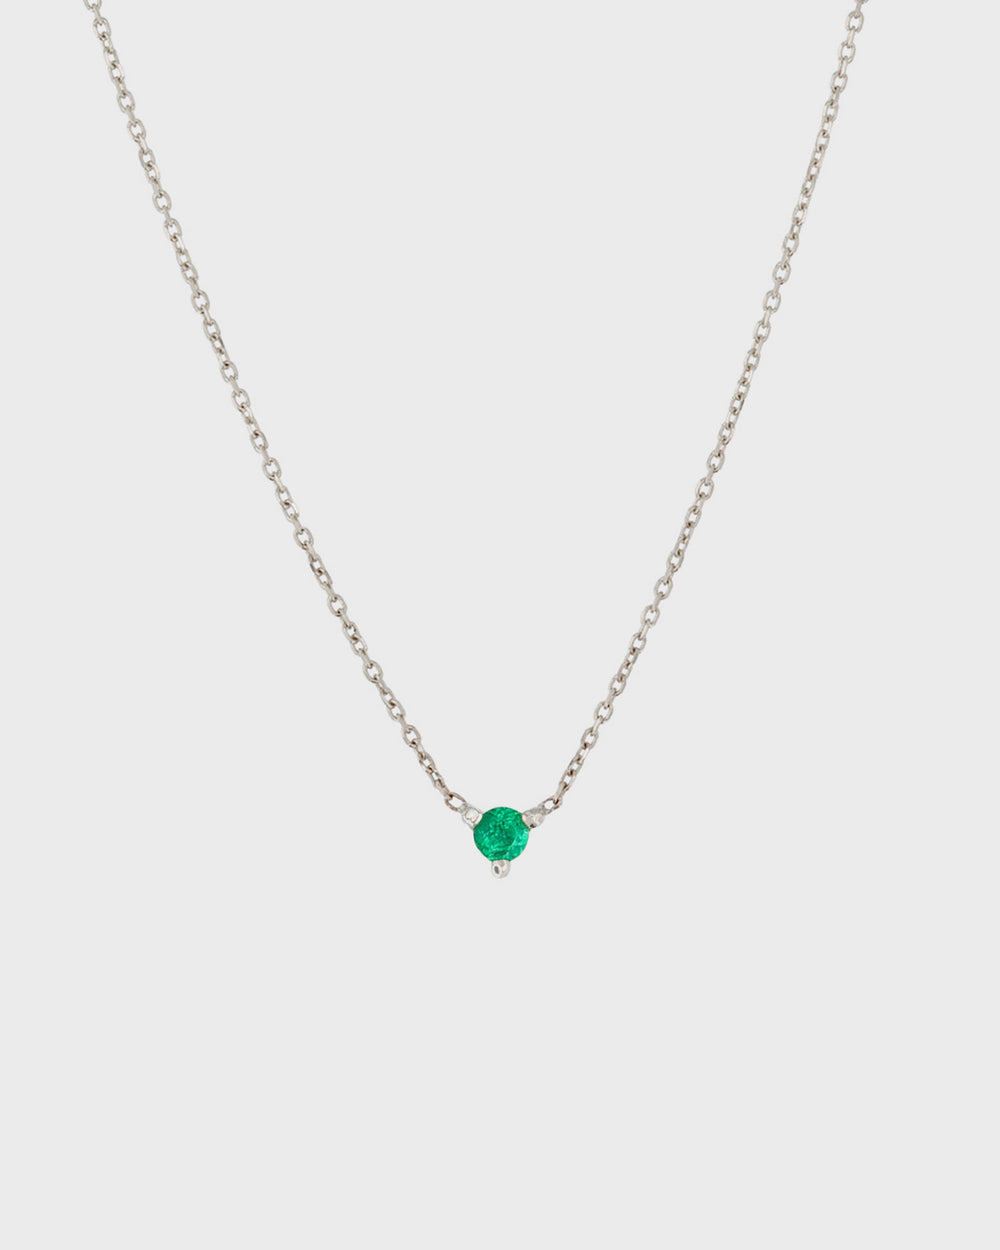 The Petite Emerald Birthstone Necklace by Sarah & Sebastian 